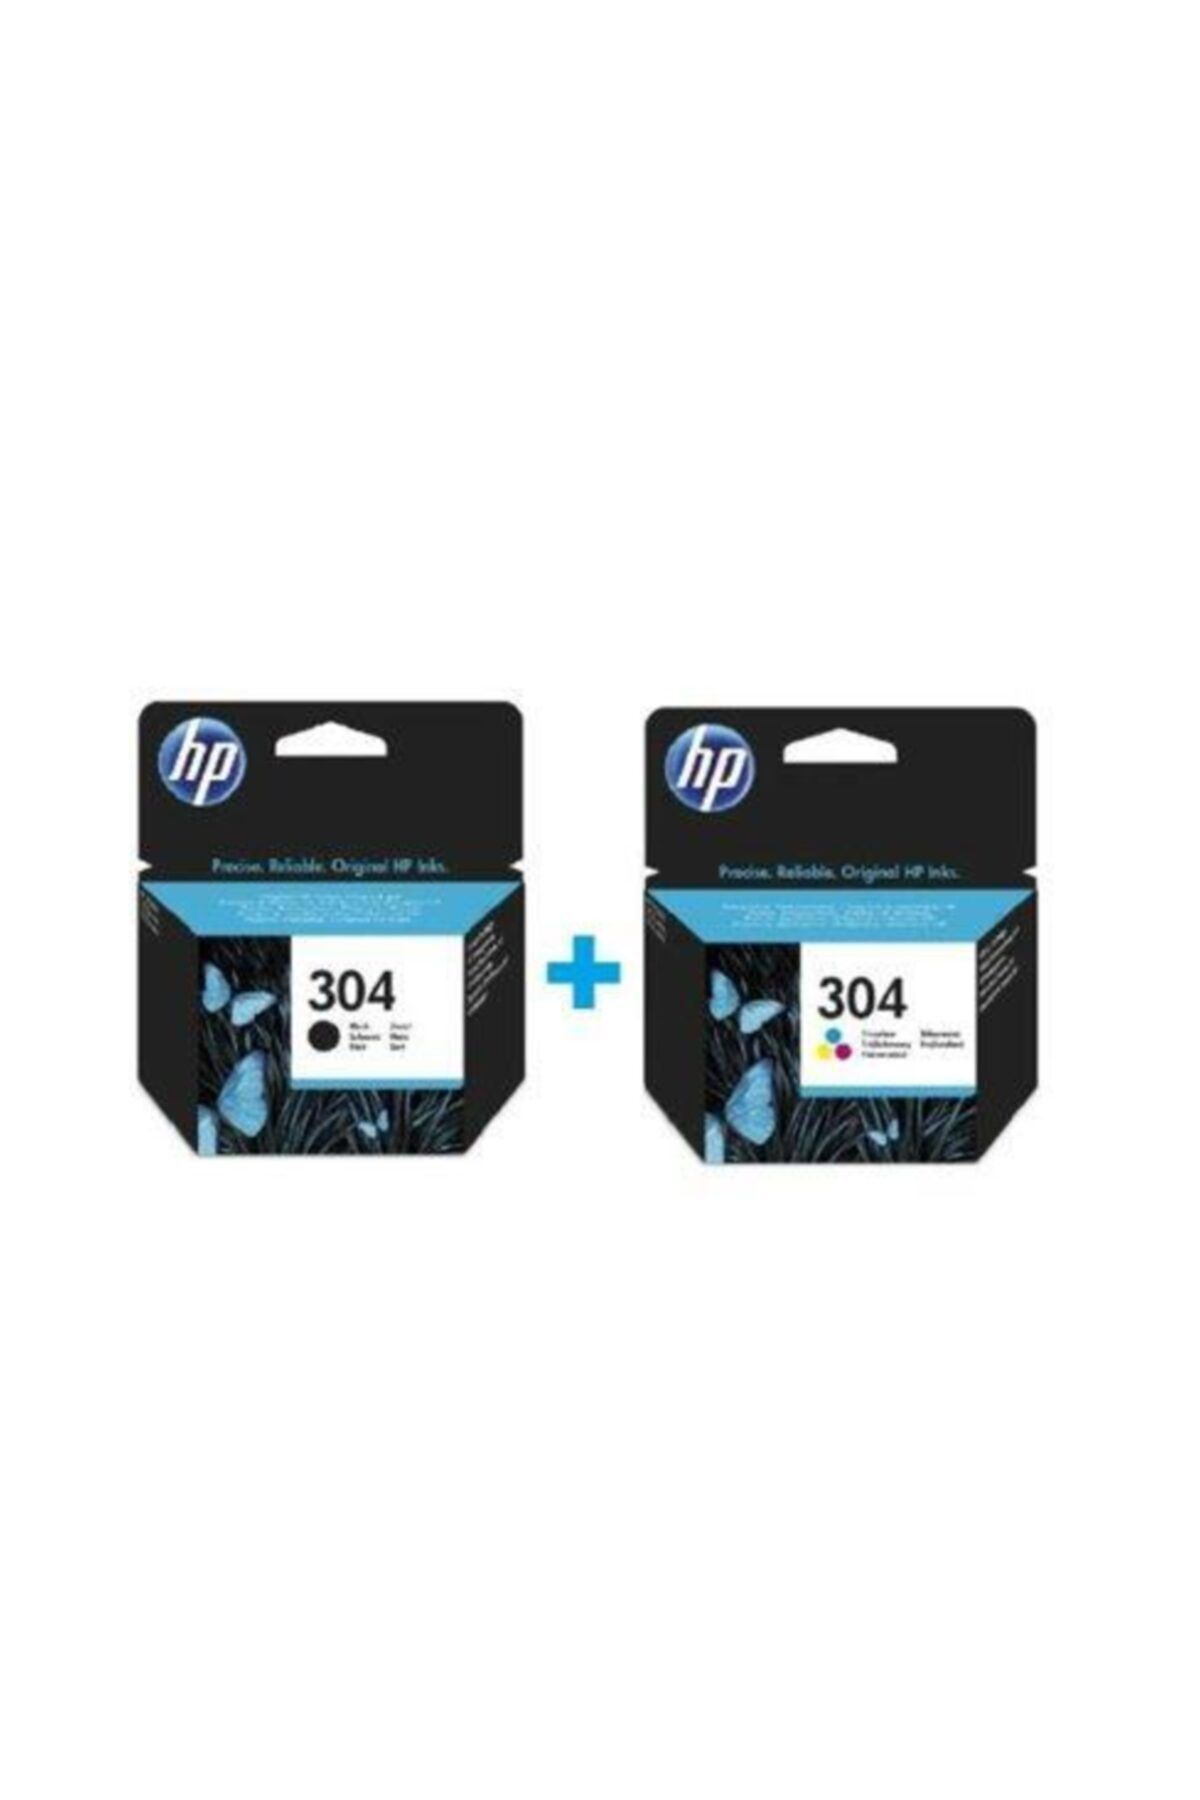 HP 304 Siyah ve Renkli Kartuş Set DeskJet 3720, 3730